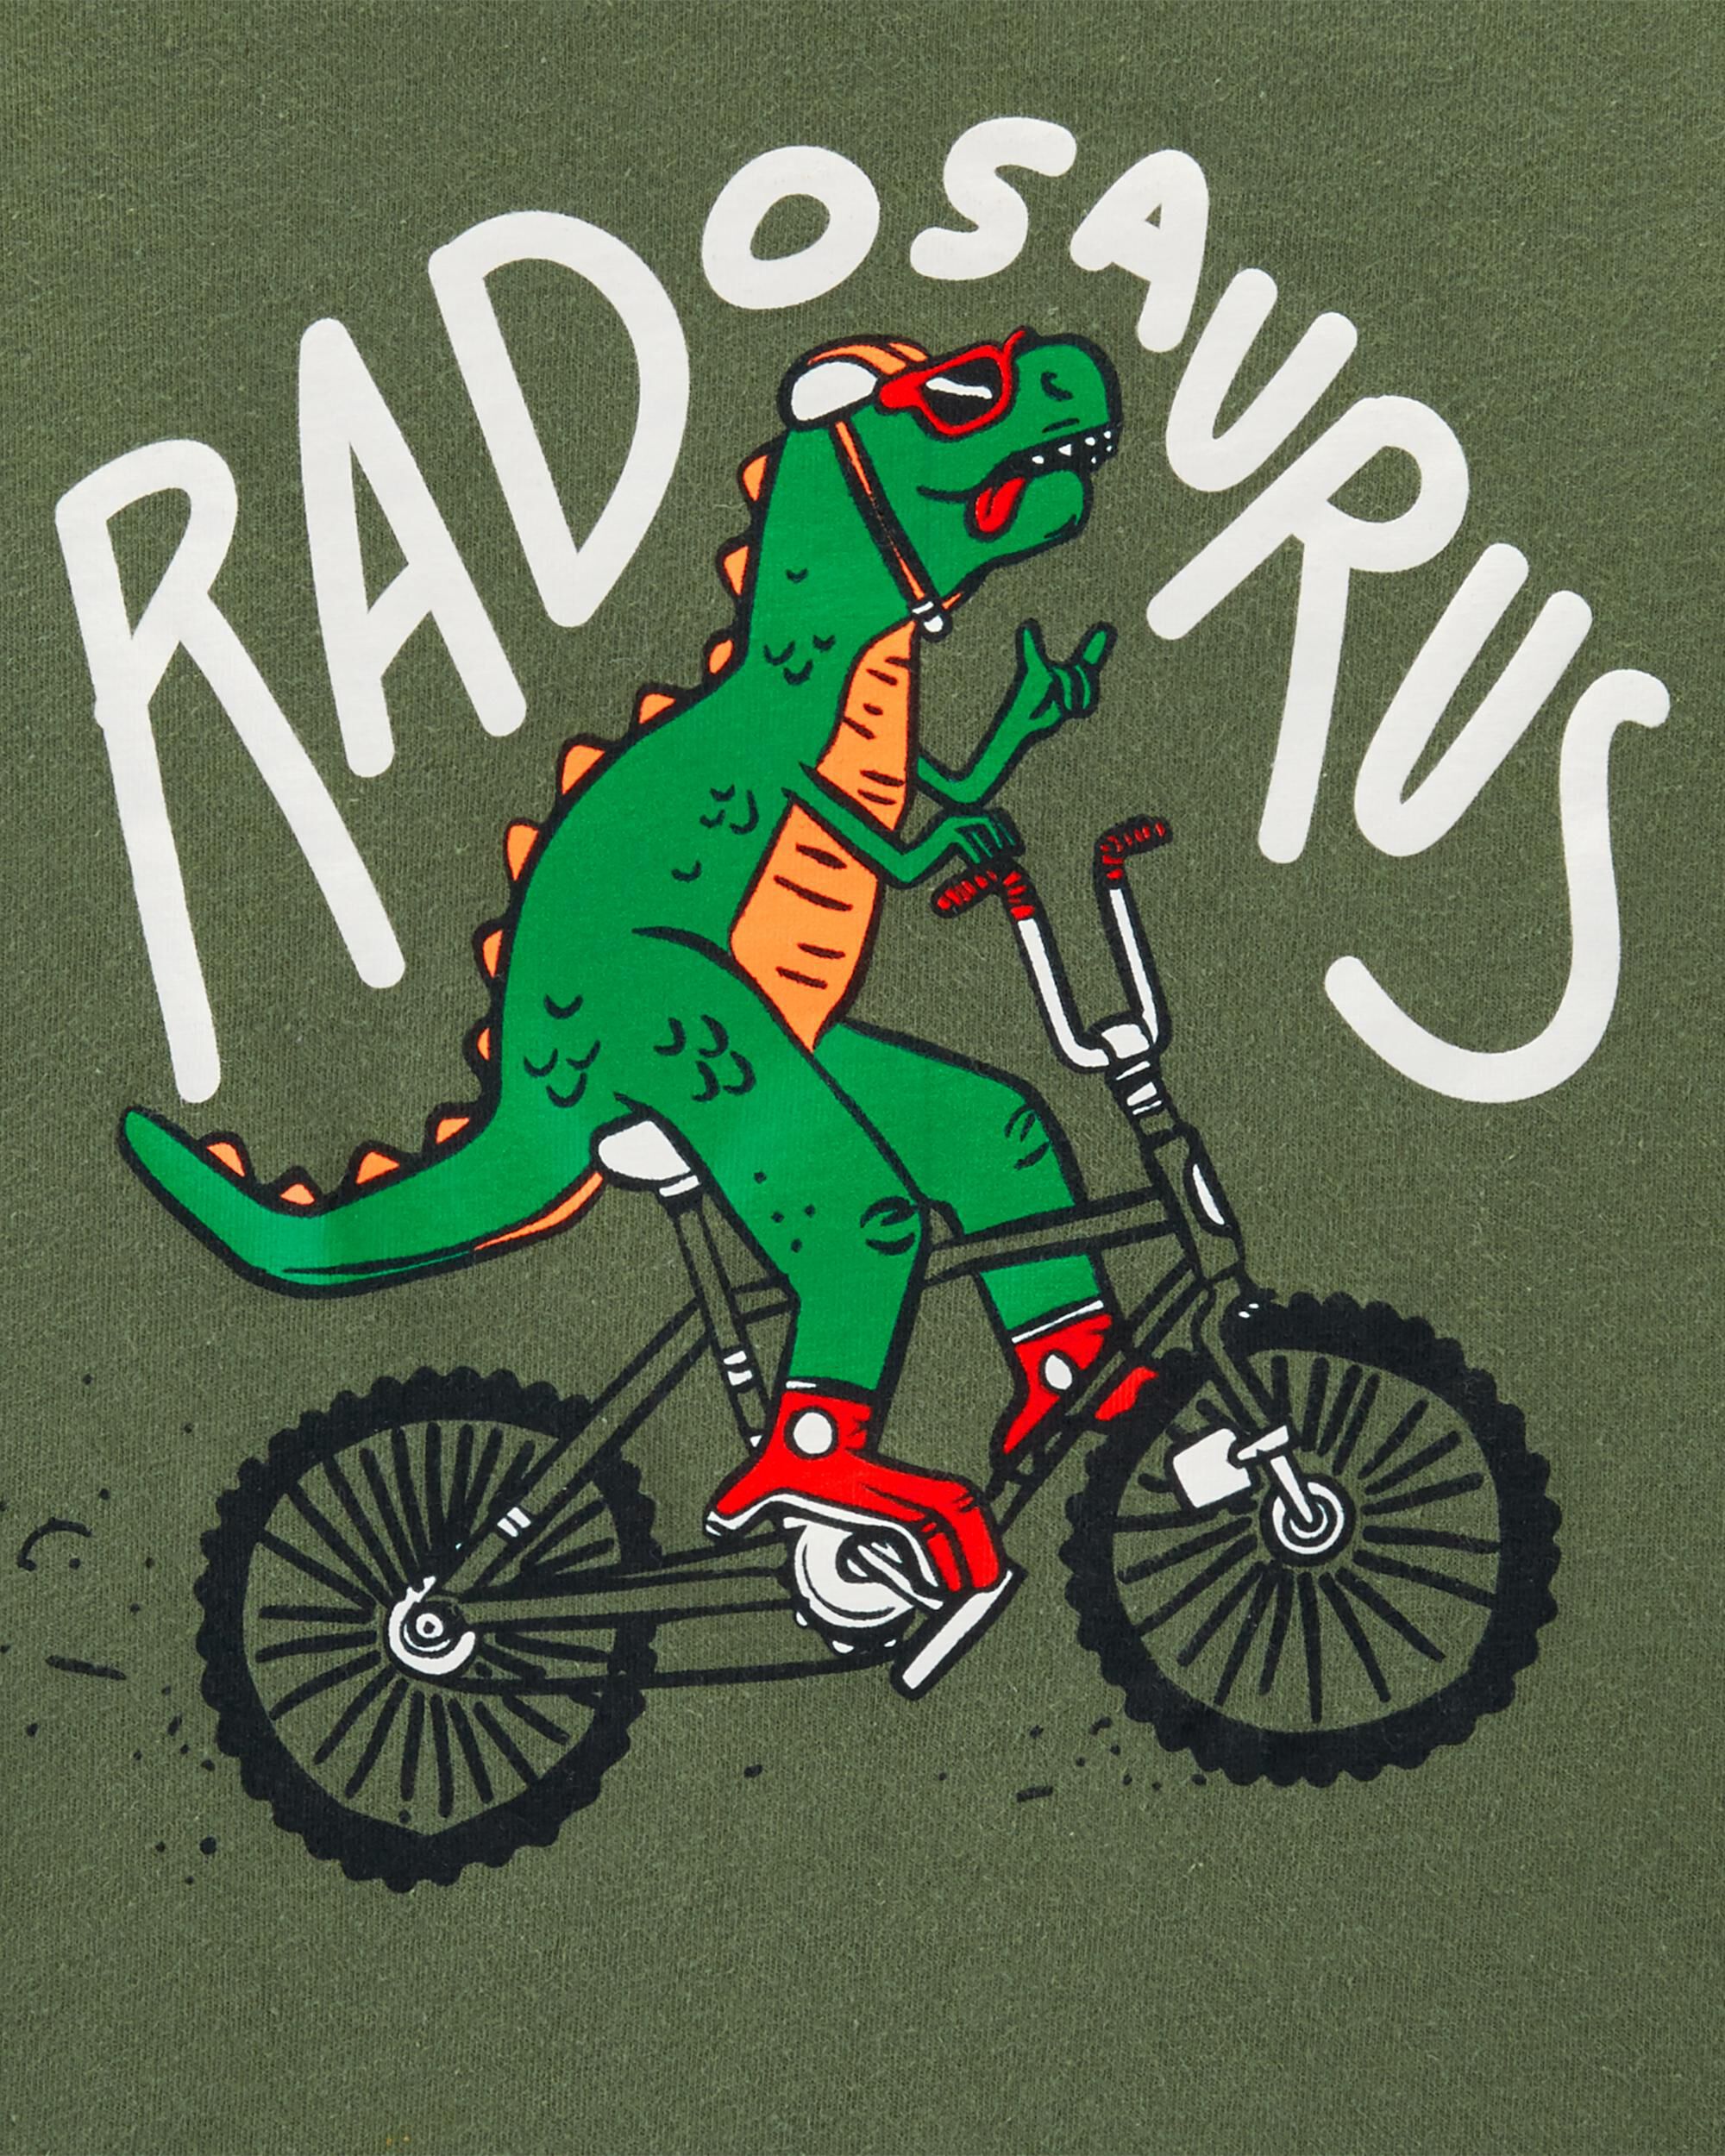 dinosaur cycling jersey